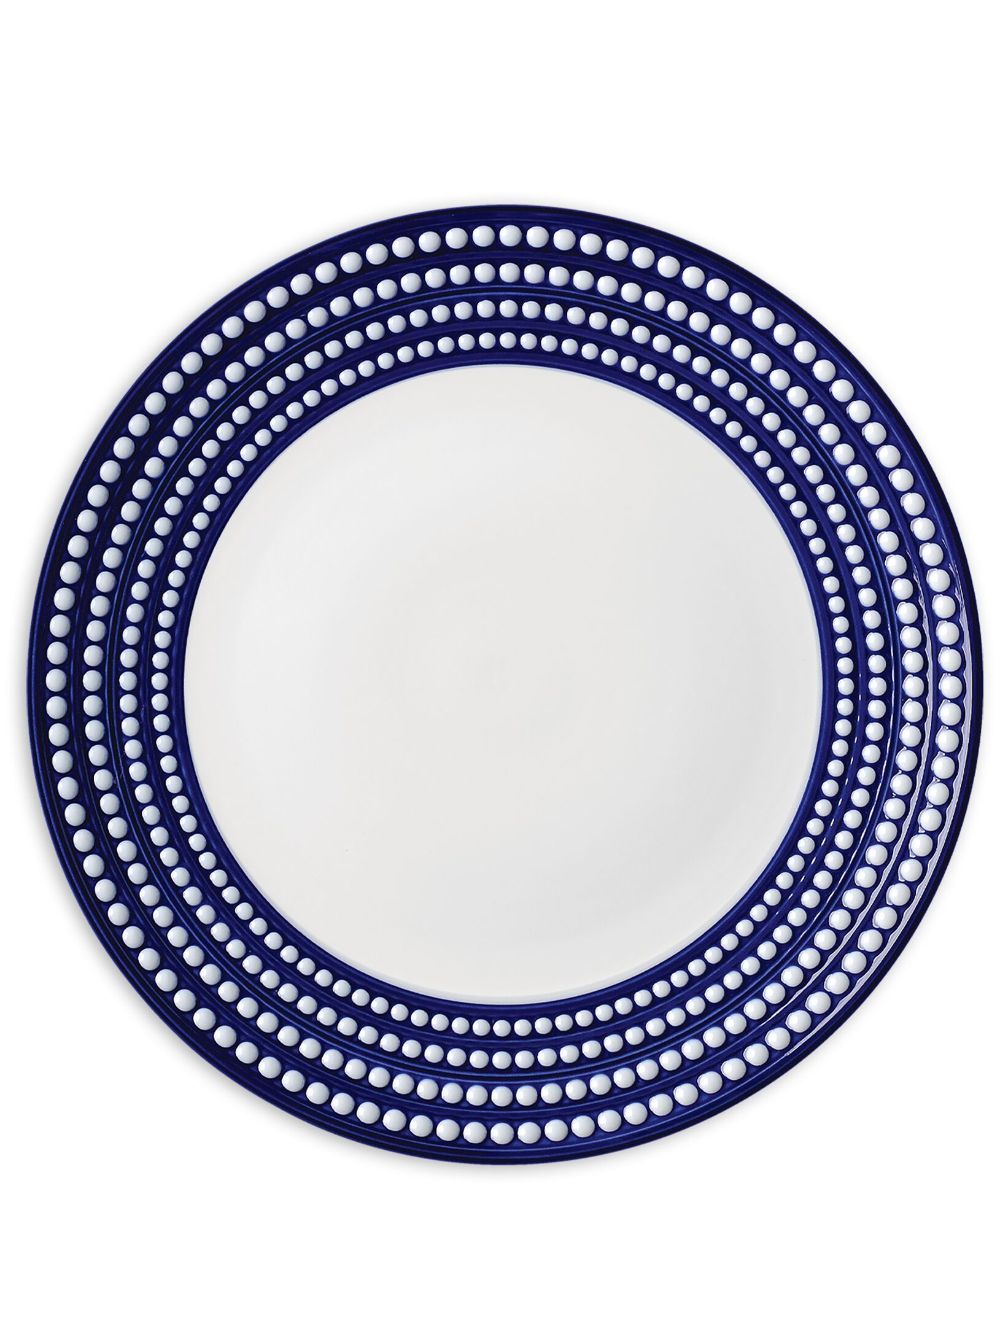 L'Objet Perlée dinner plate (27cm) - Blue von L'Objet